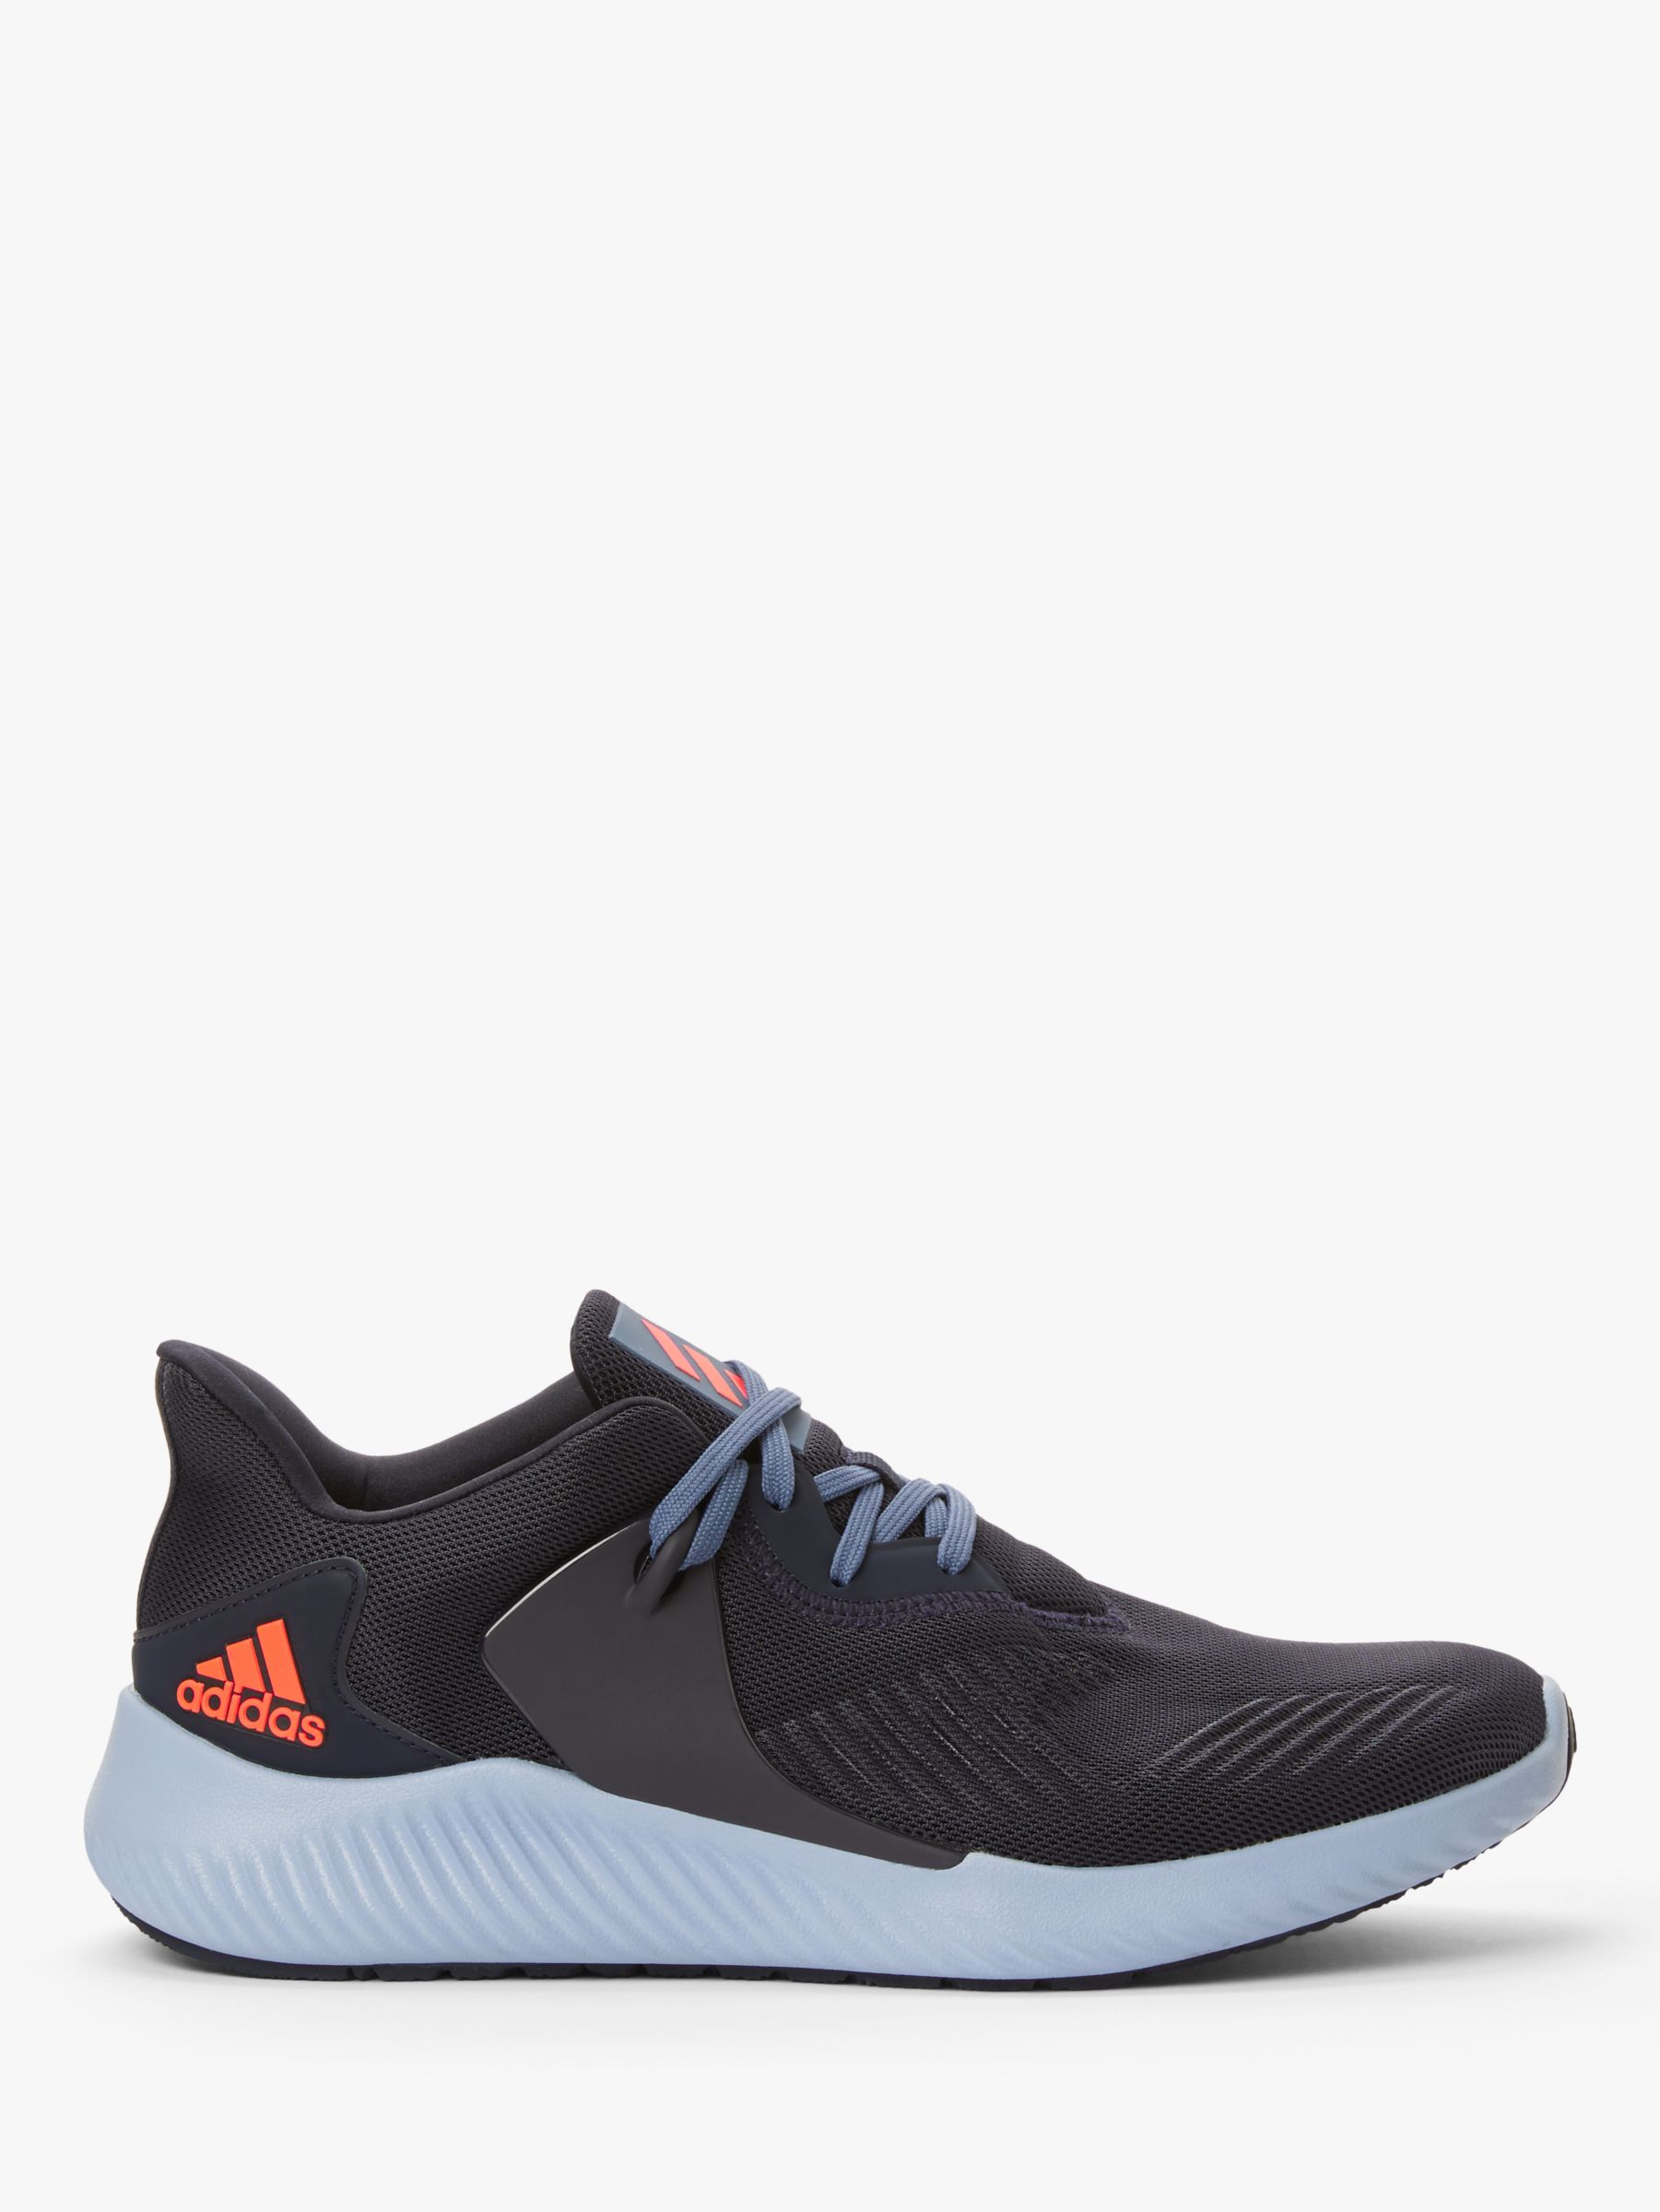 adidas Alphabounce RC 2.0 Men's Running Shoes, Legend Ink/Solar Orange/Glow Blue